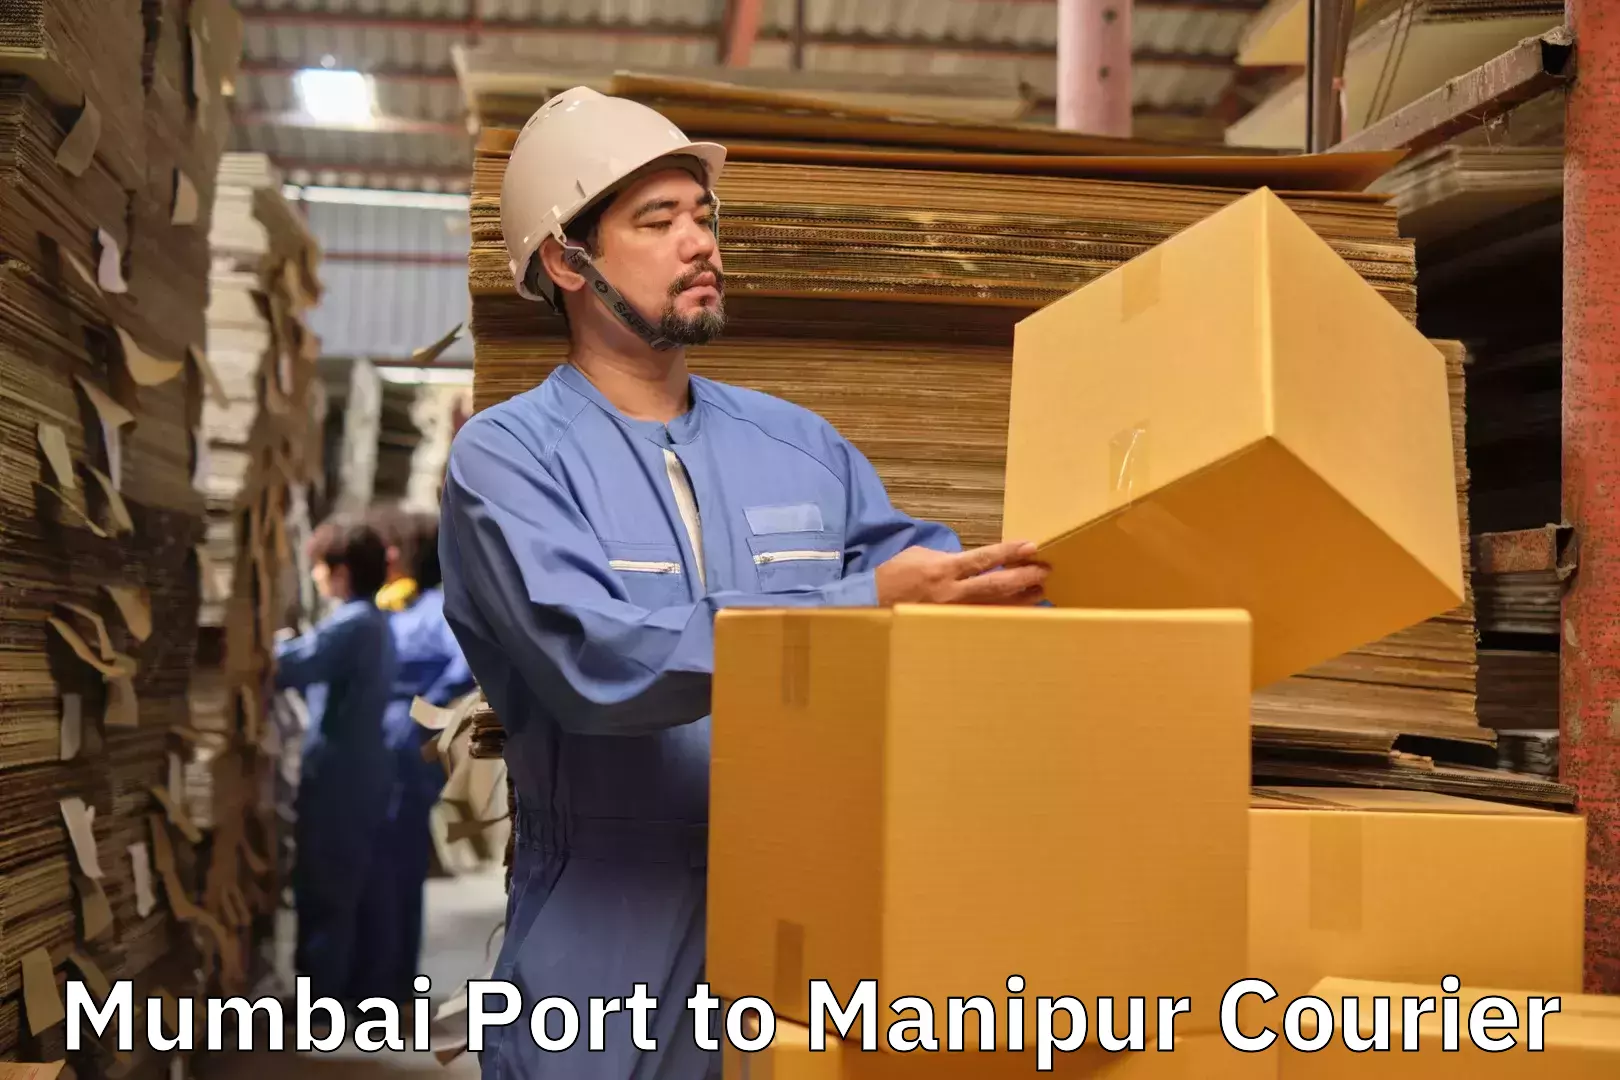 Hotel to Door baggage transport Mumbai Port to Manipur